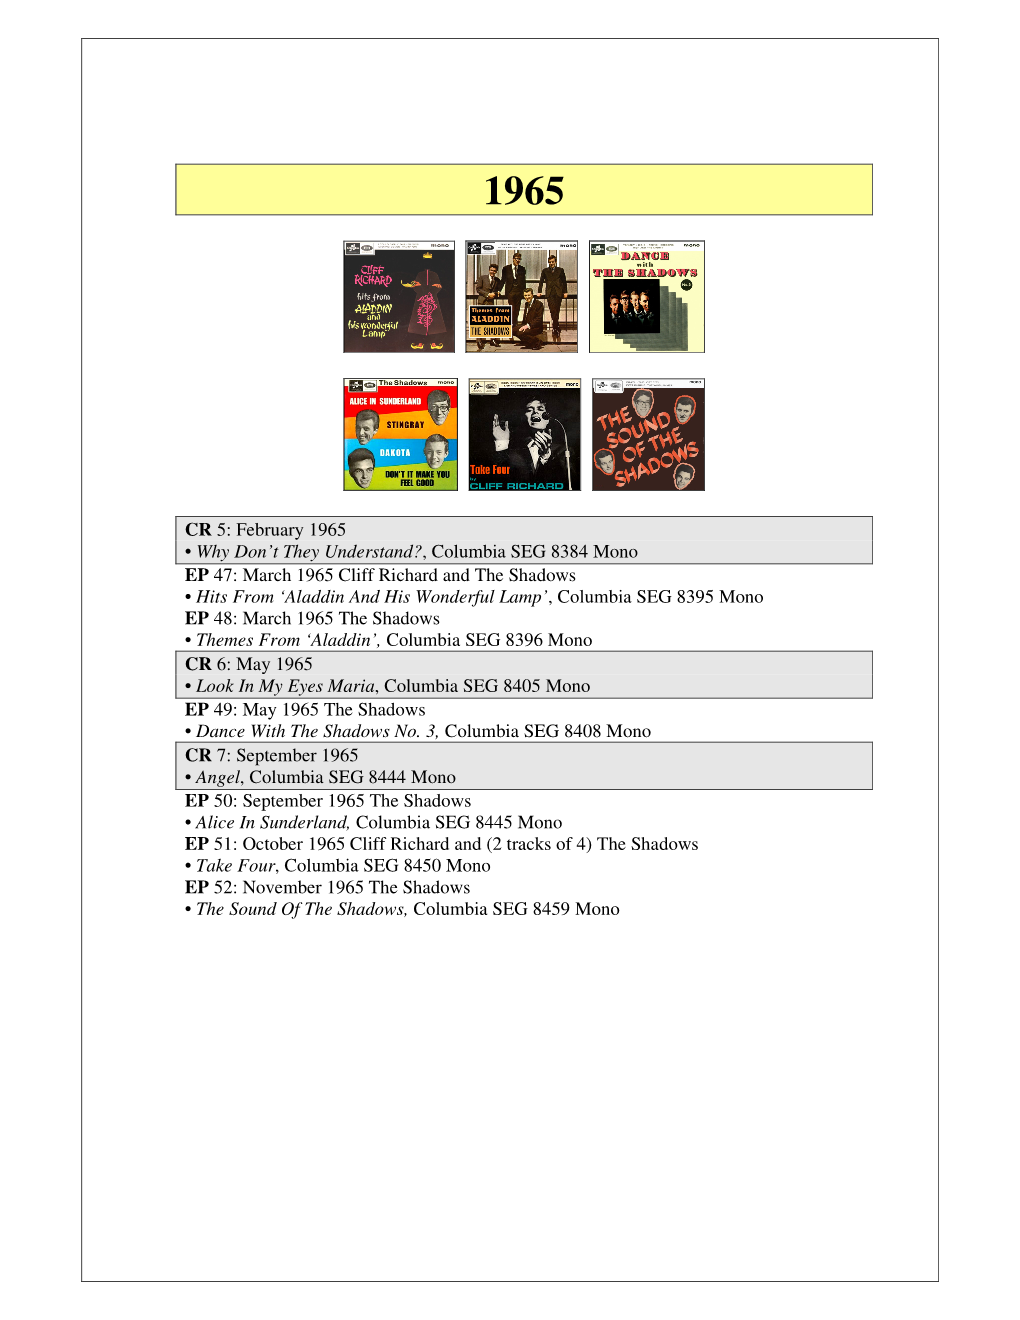 Columbia SEG 8384 Mono EP 47: March 1965 Cliff Richard and The